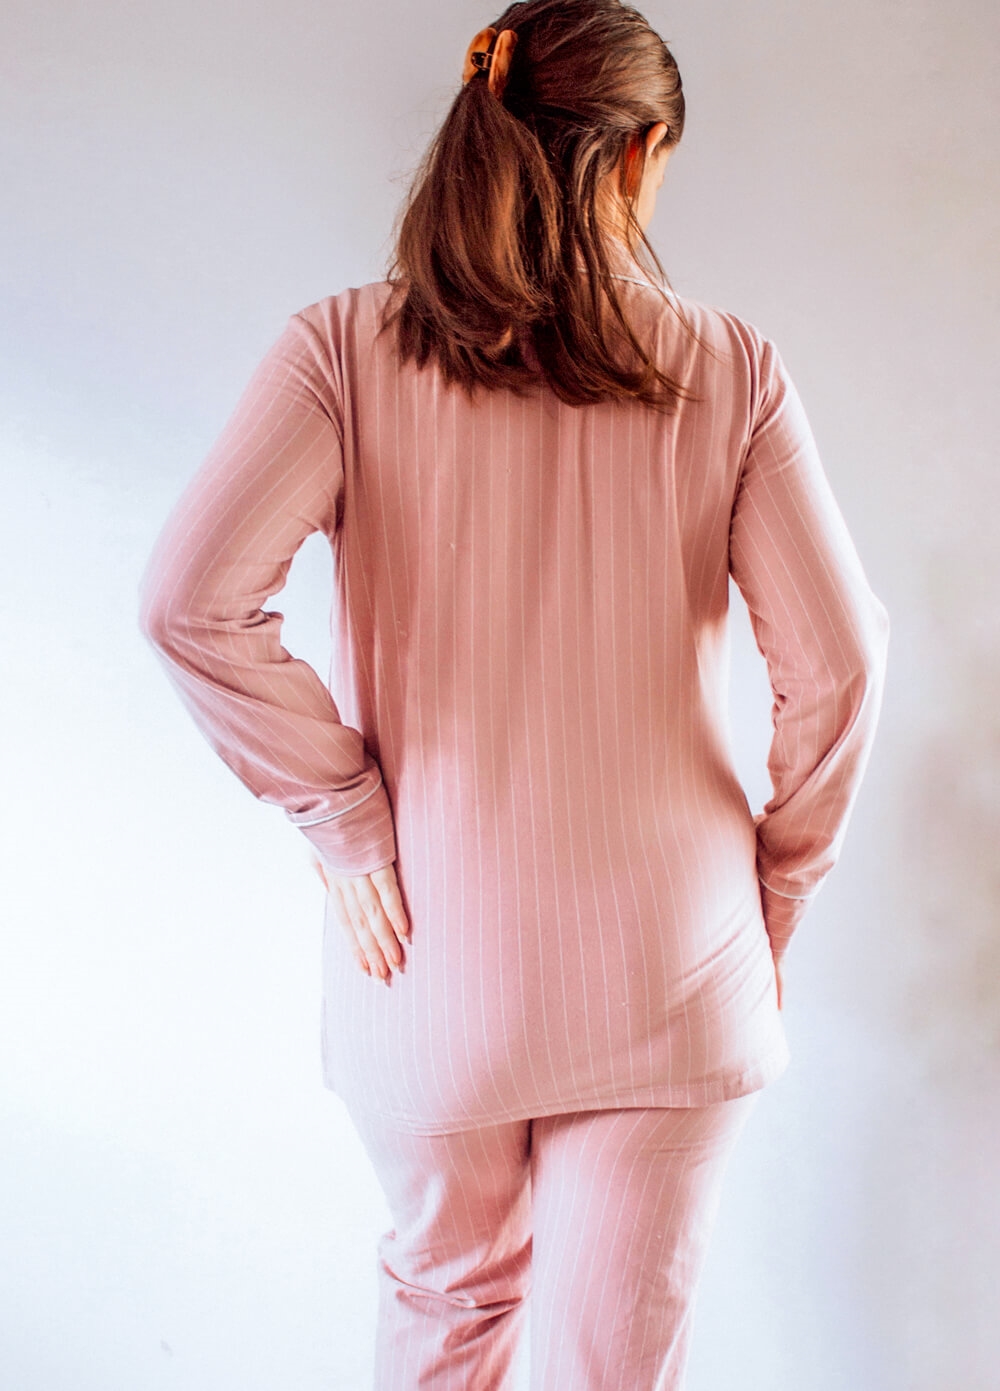 Lait & Co - Ines Dream Away Nursing Pyjama Set in Pink Stripe